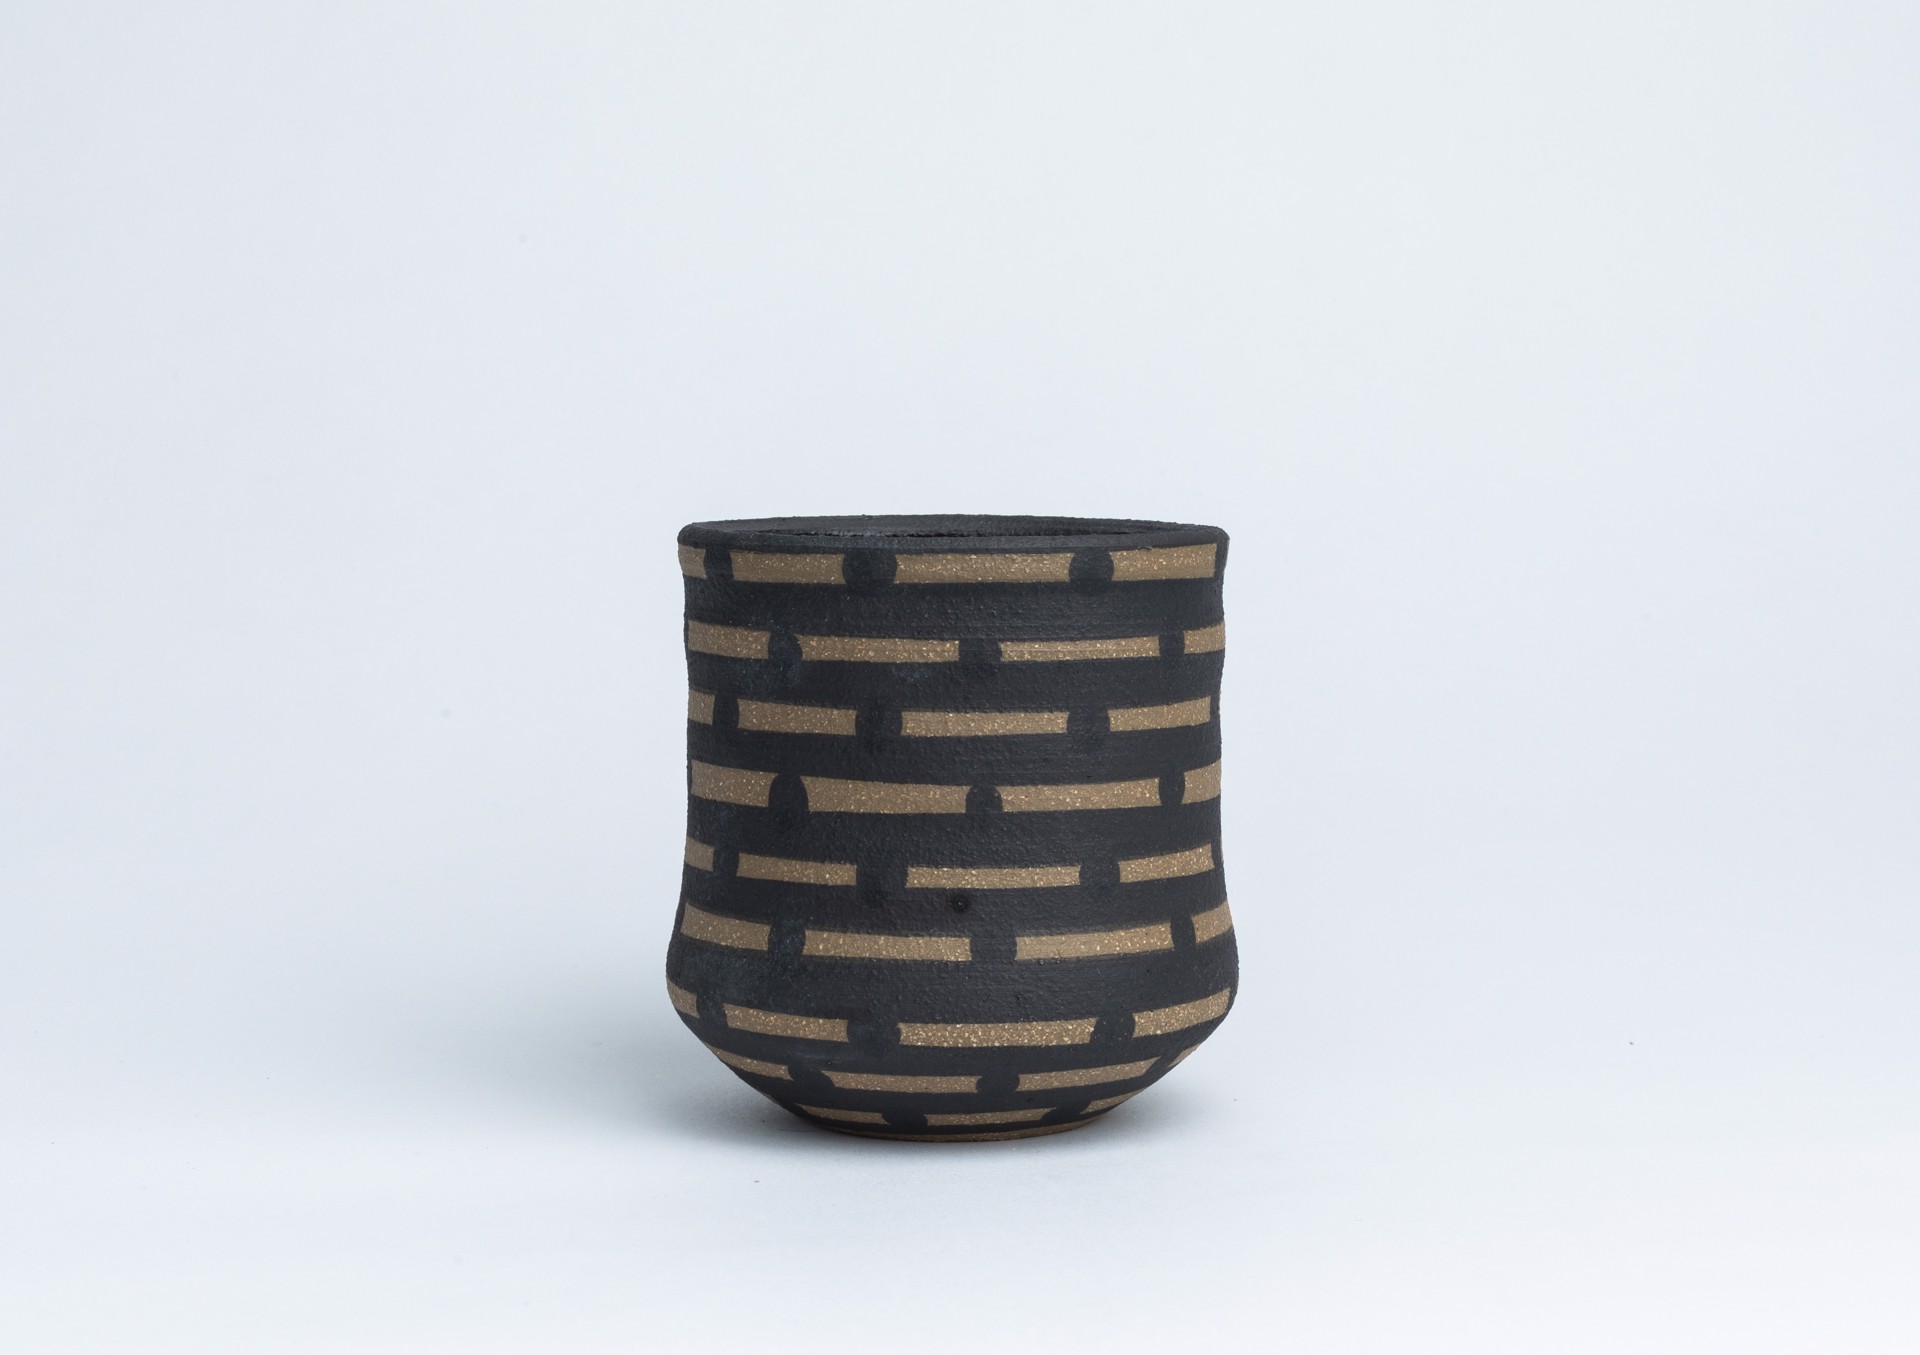 Black Patterned Cup/Vase by Glory Day Loflin Ceramics